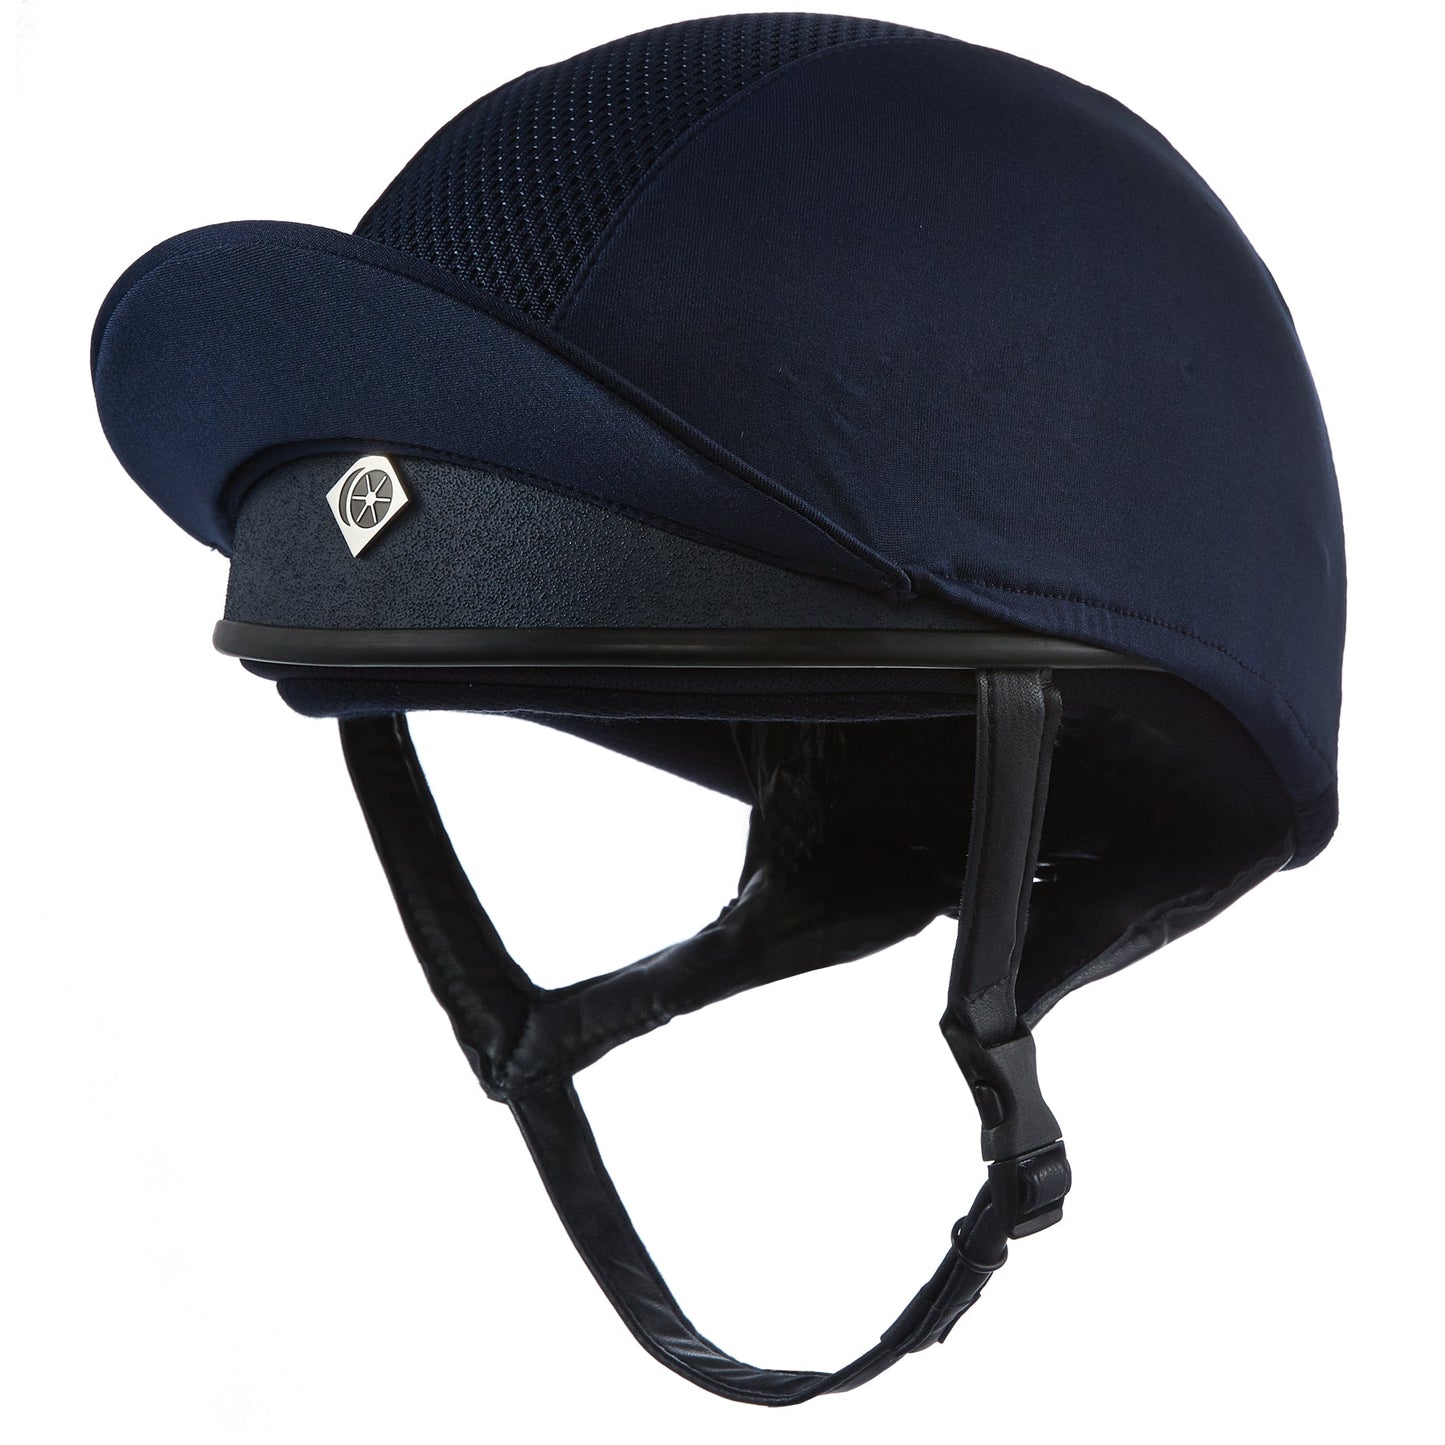 KEP brand equestrian helmet, navy blue, modern style, side view.